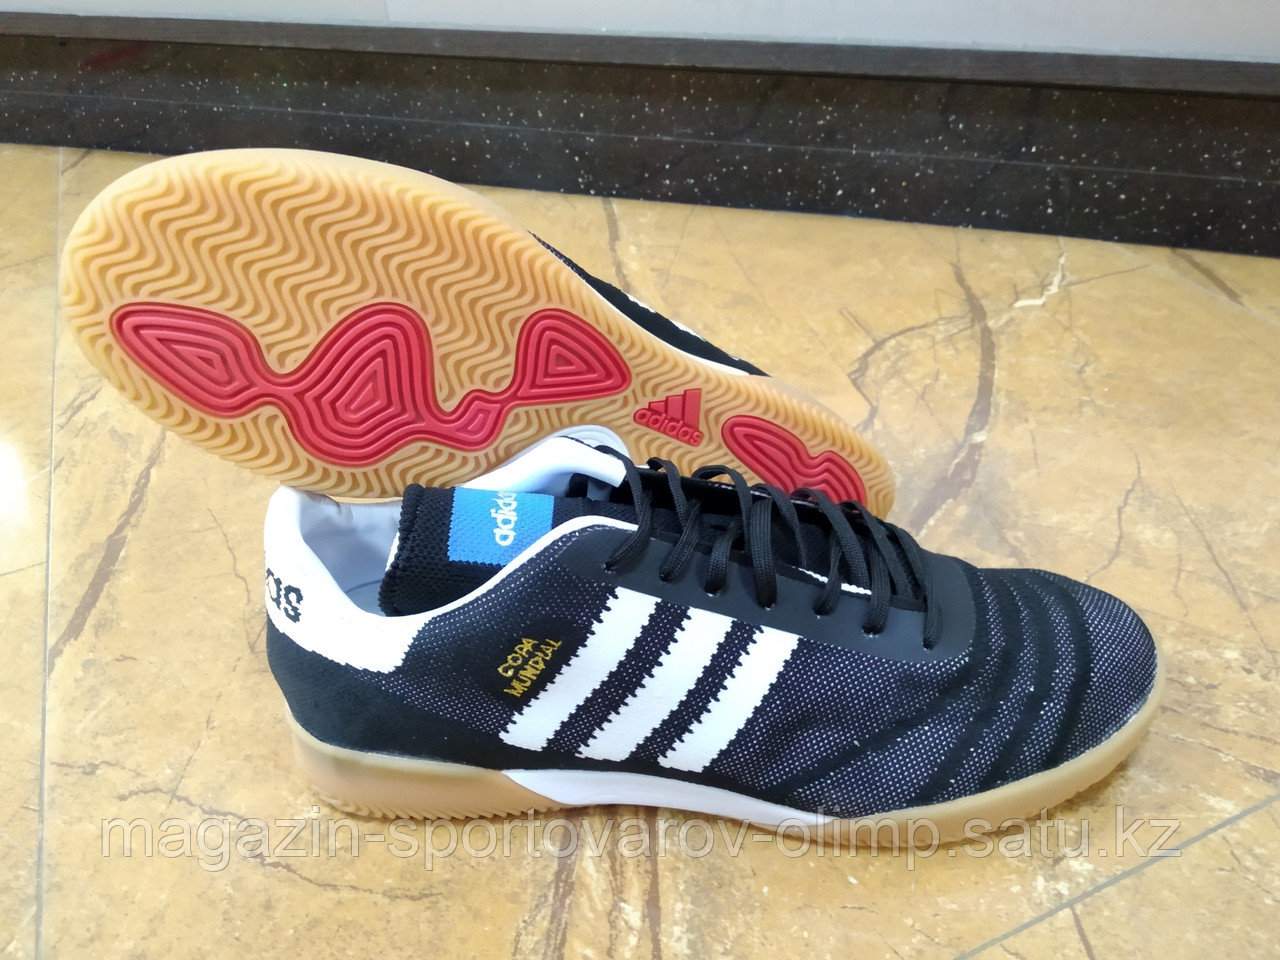 Обувь для футбола, футзалки Adidas